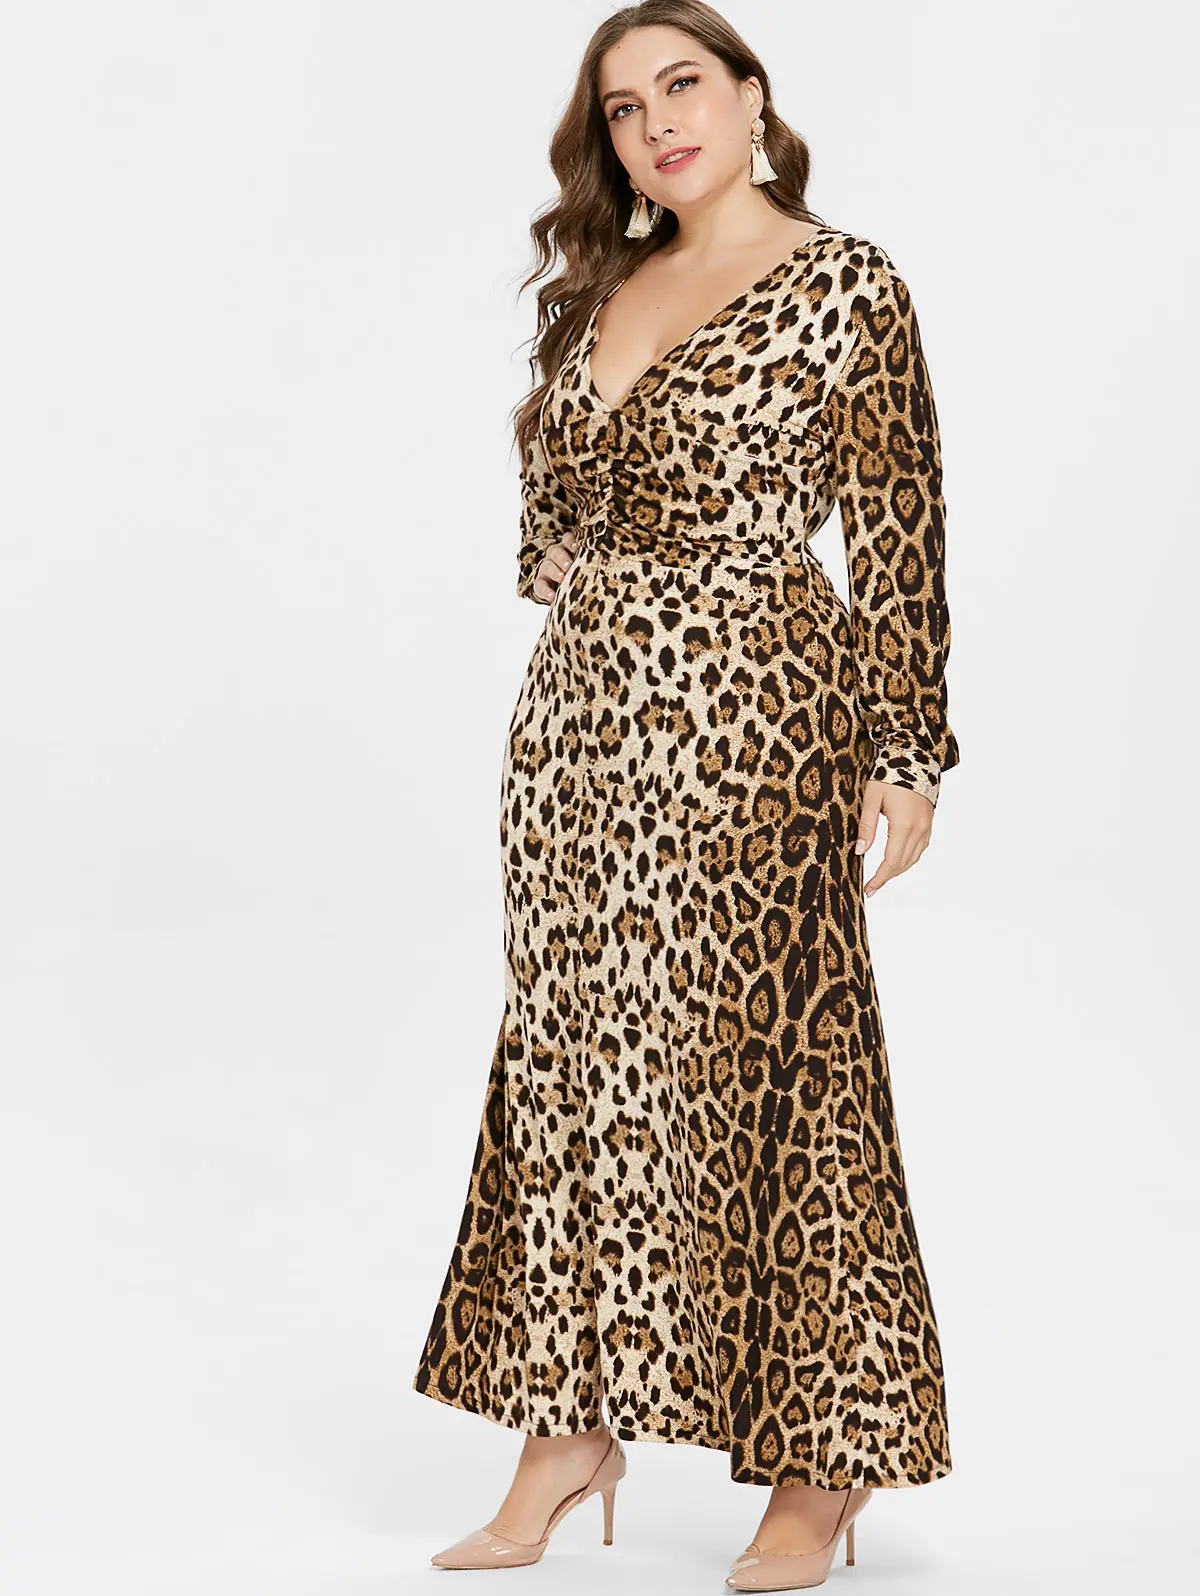 Sovalro Plus Size Women Dress Leopard Print V Neck Long Sleeve Front ...